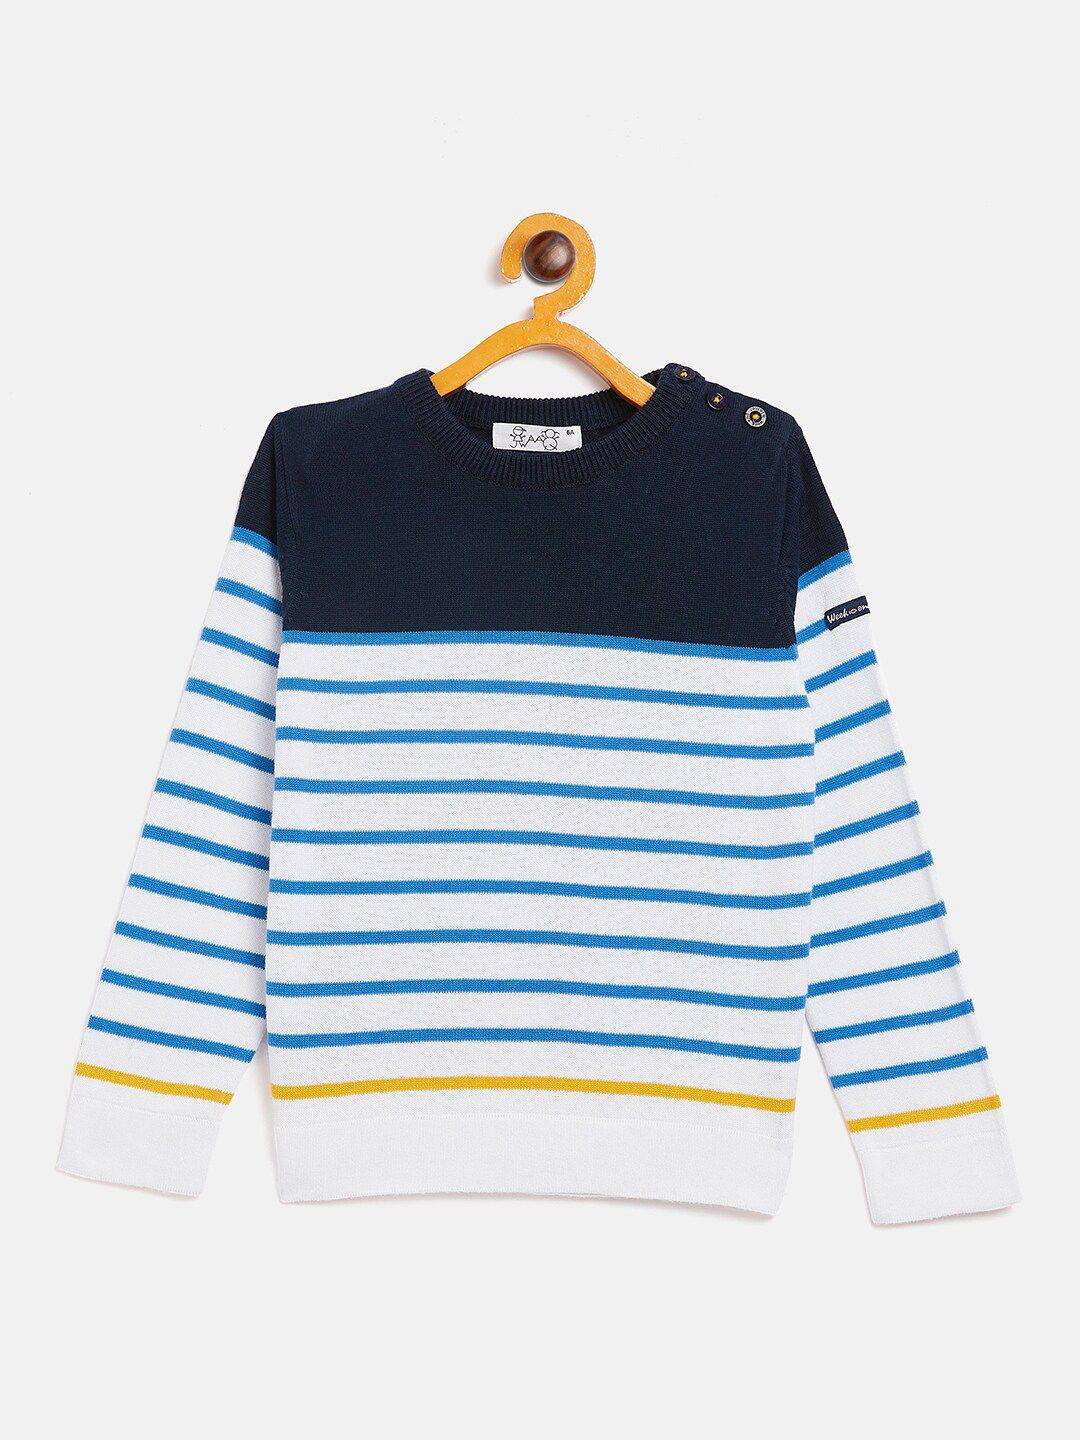 jwaaq-unisex-kids-navy-blue-&-black-striped-pullover